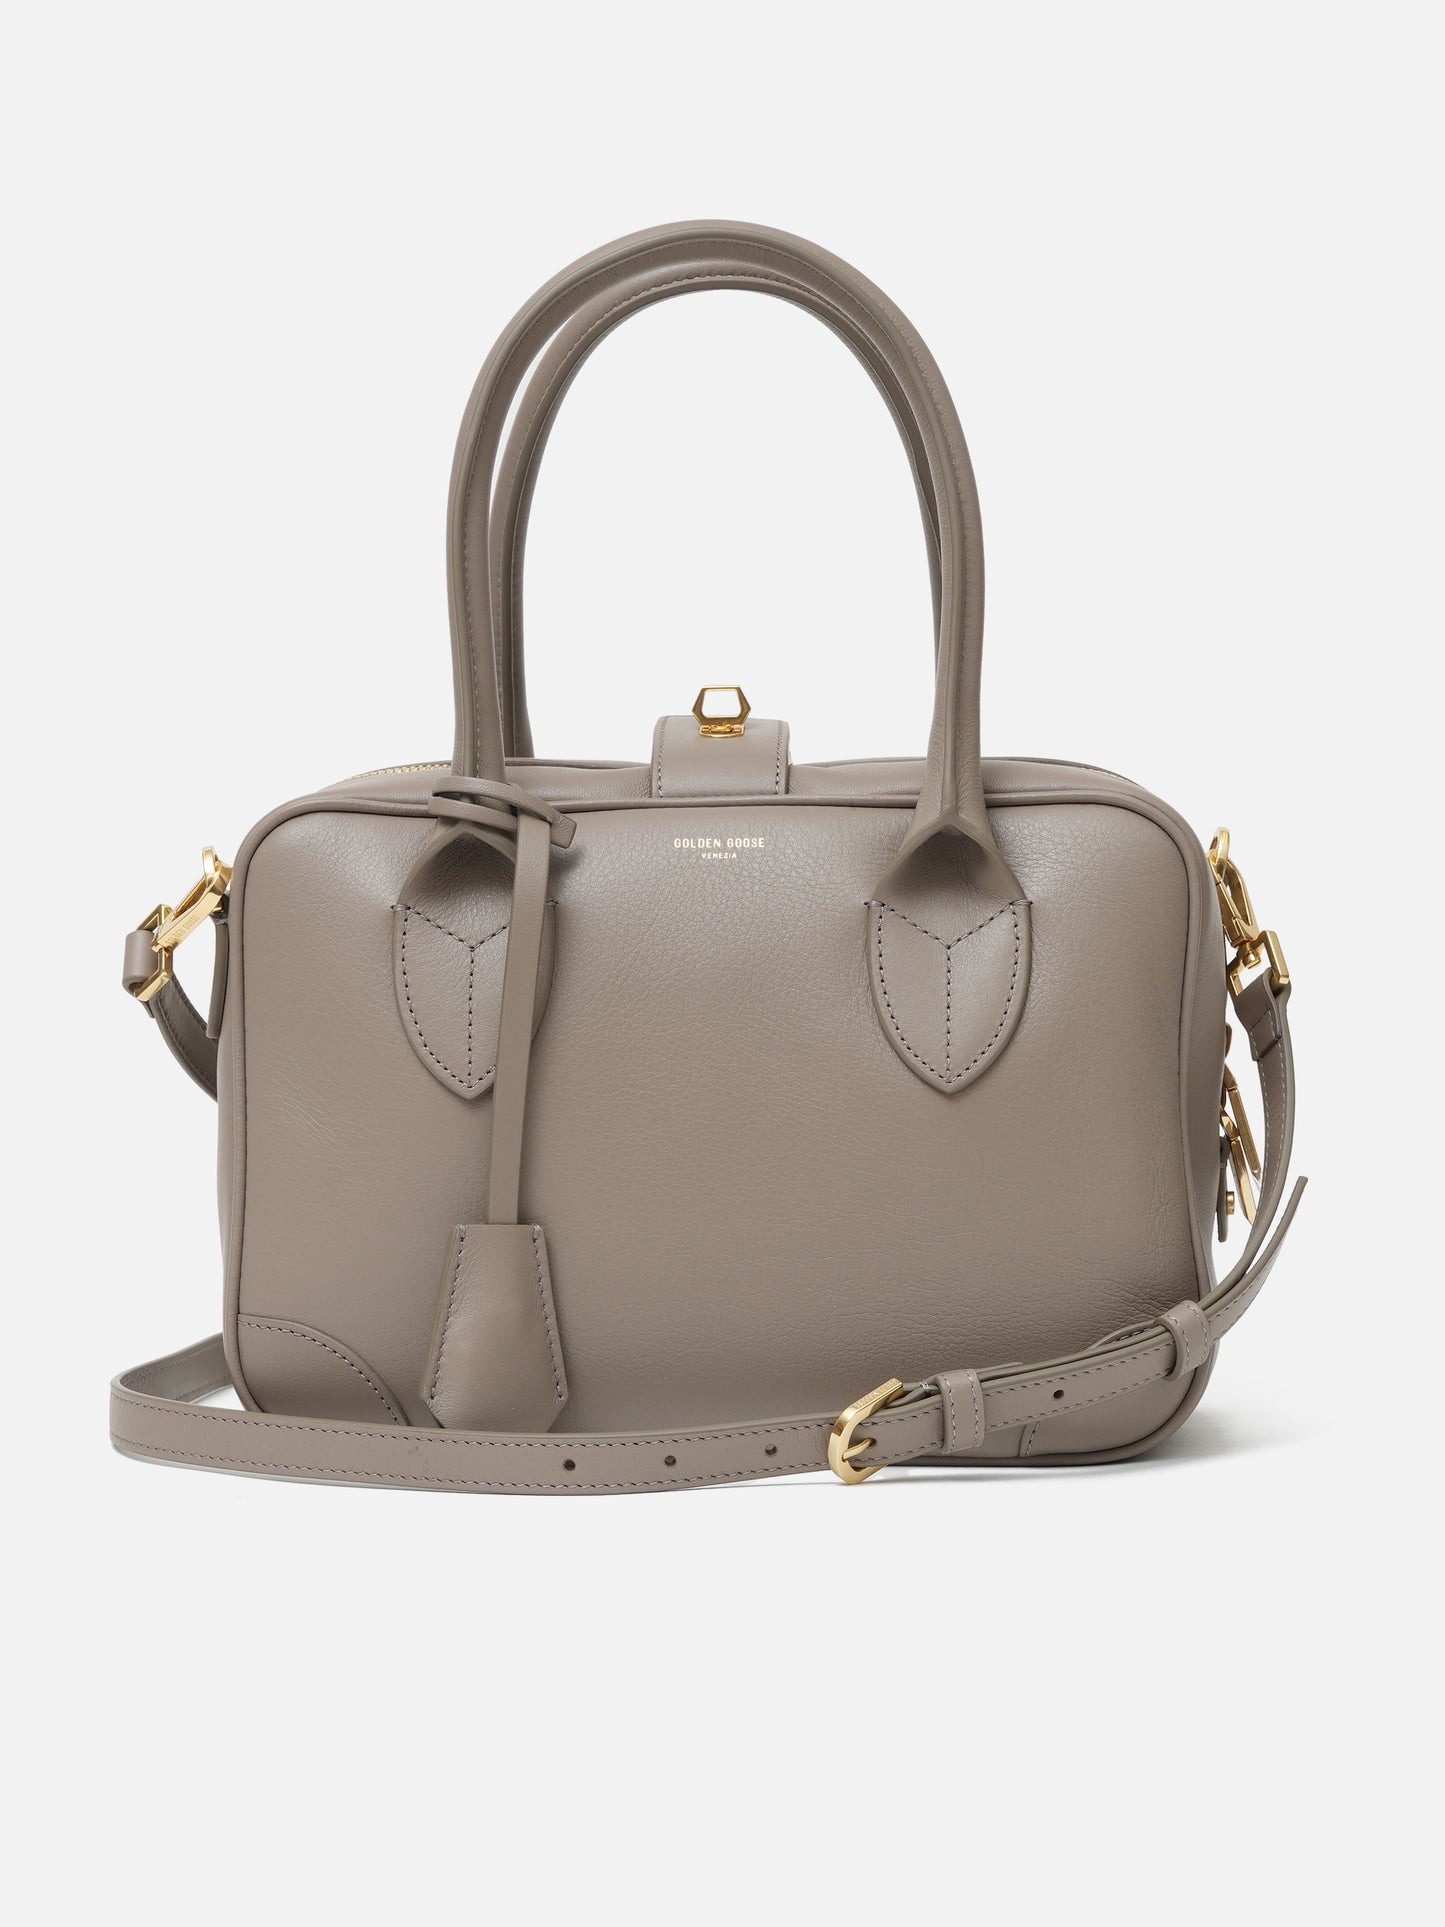 Vita handbag in calfskin